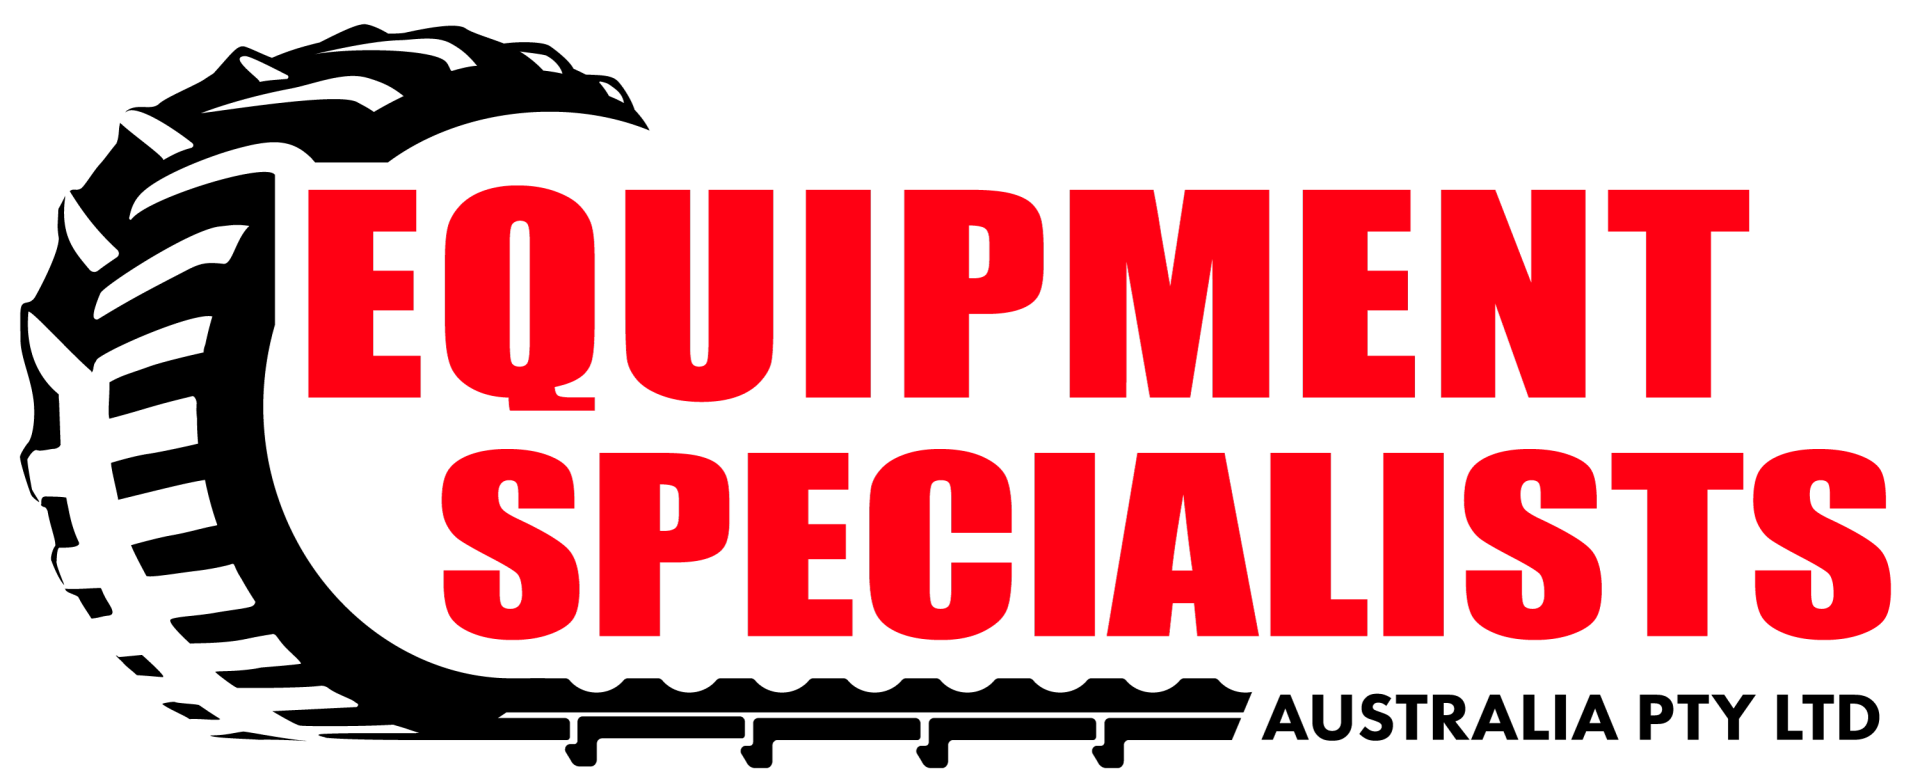 equipment specialists australia logo